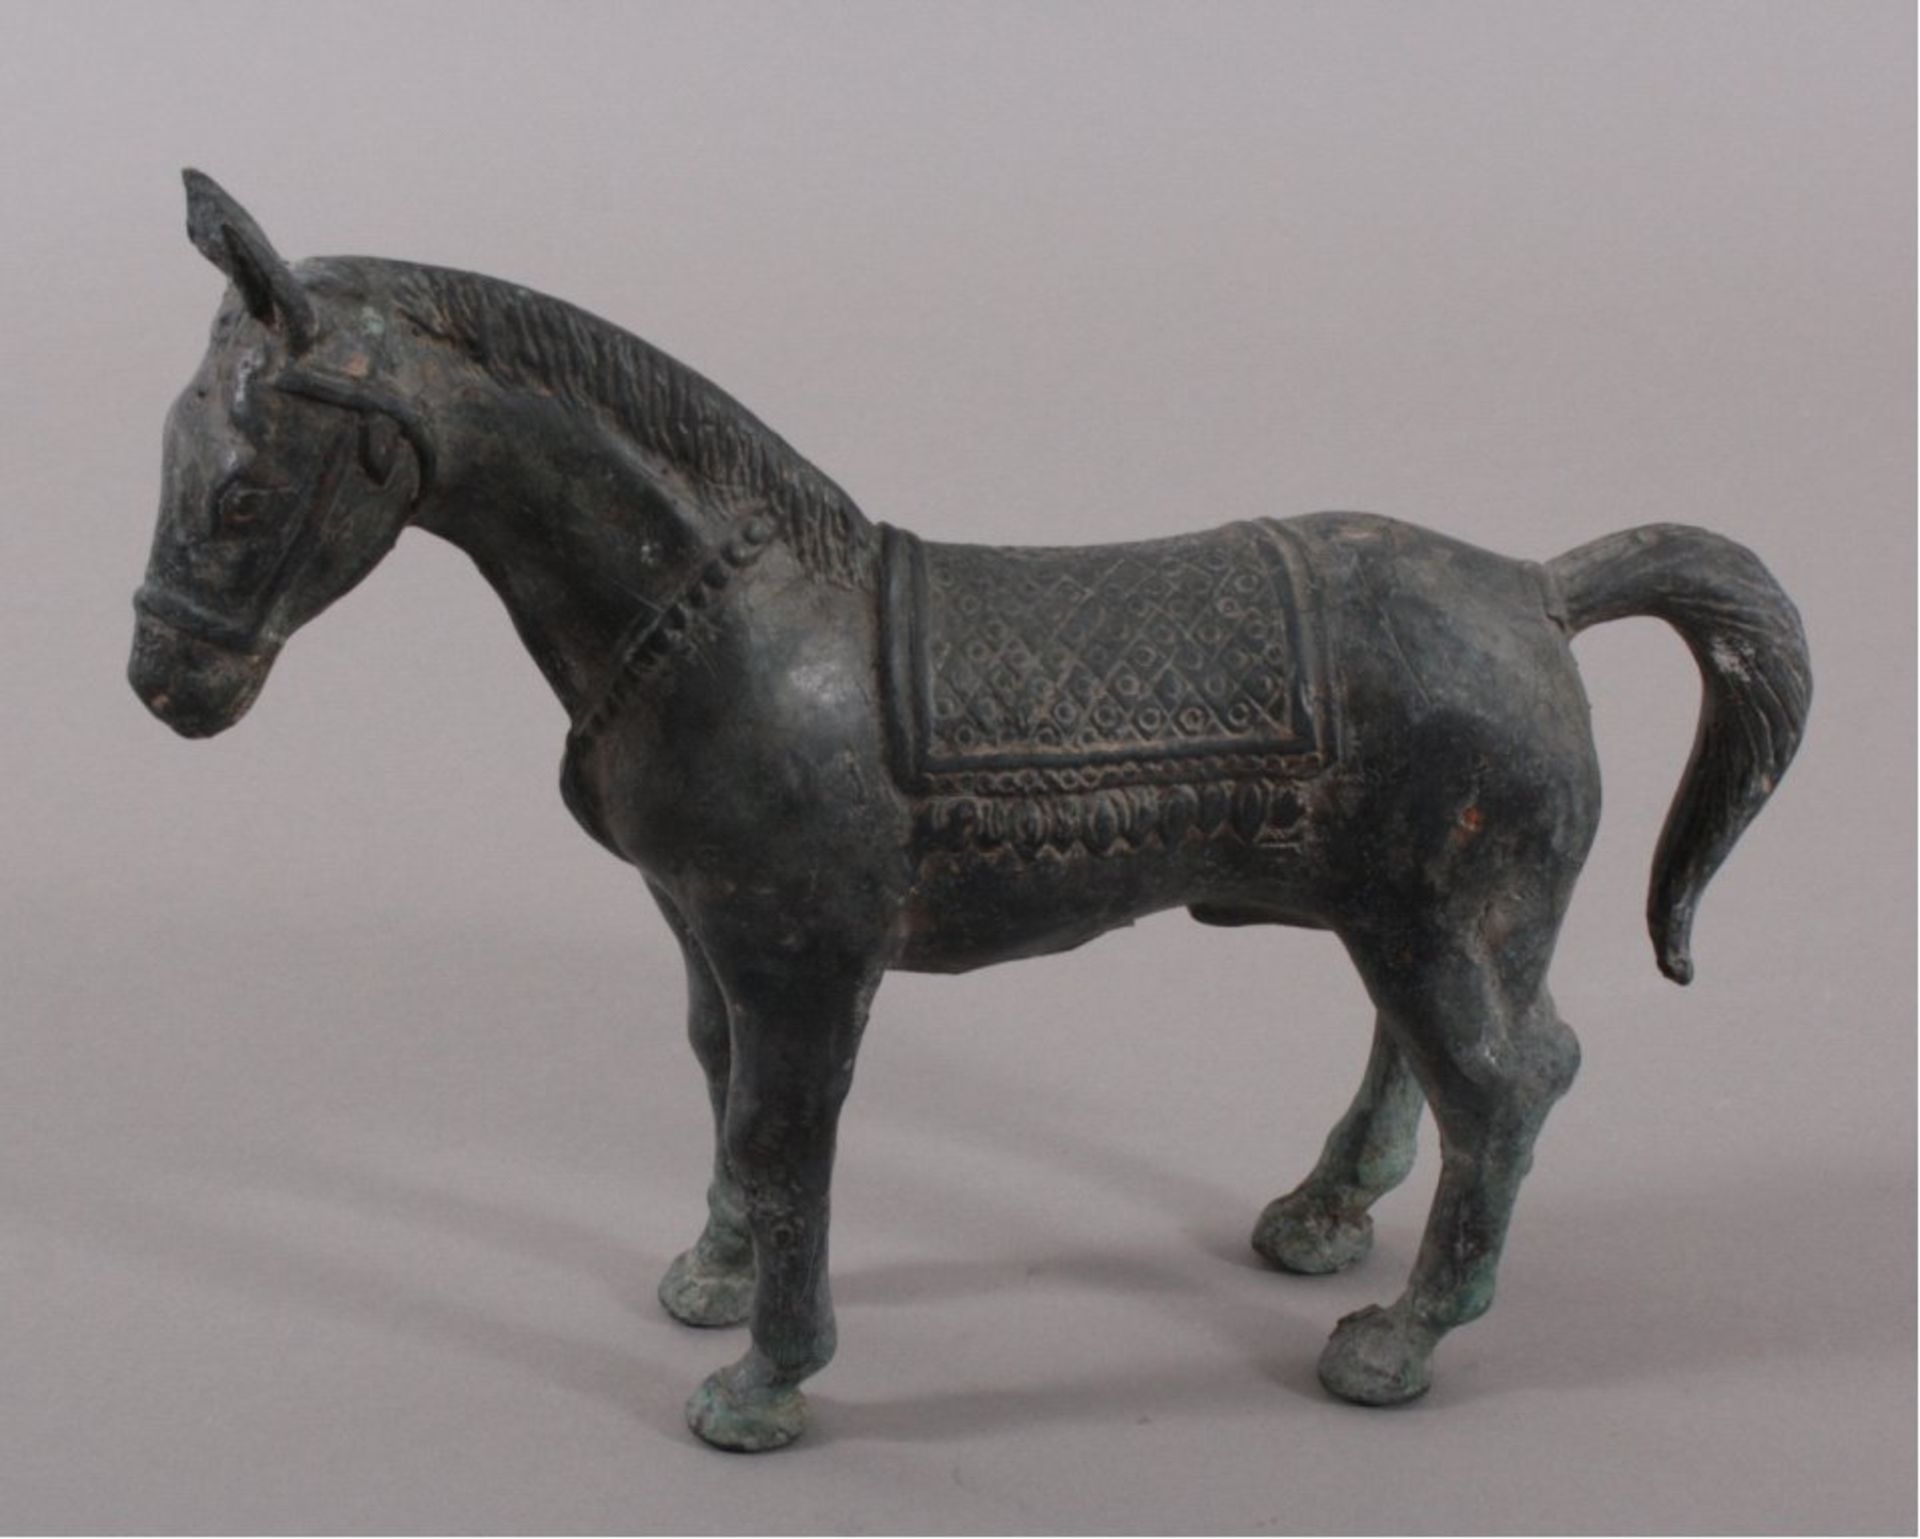 Pferde-Skulptur, Thailand 20. Jh.Bronzeskulptur, dunkel patiniert, ca. H-20, L-25 cm